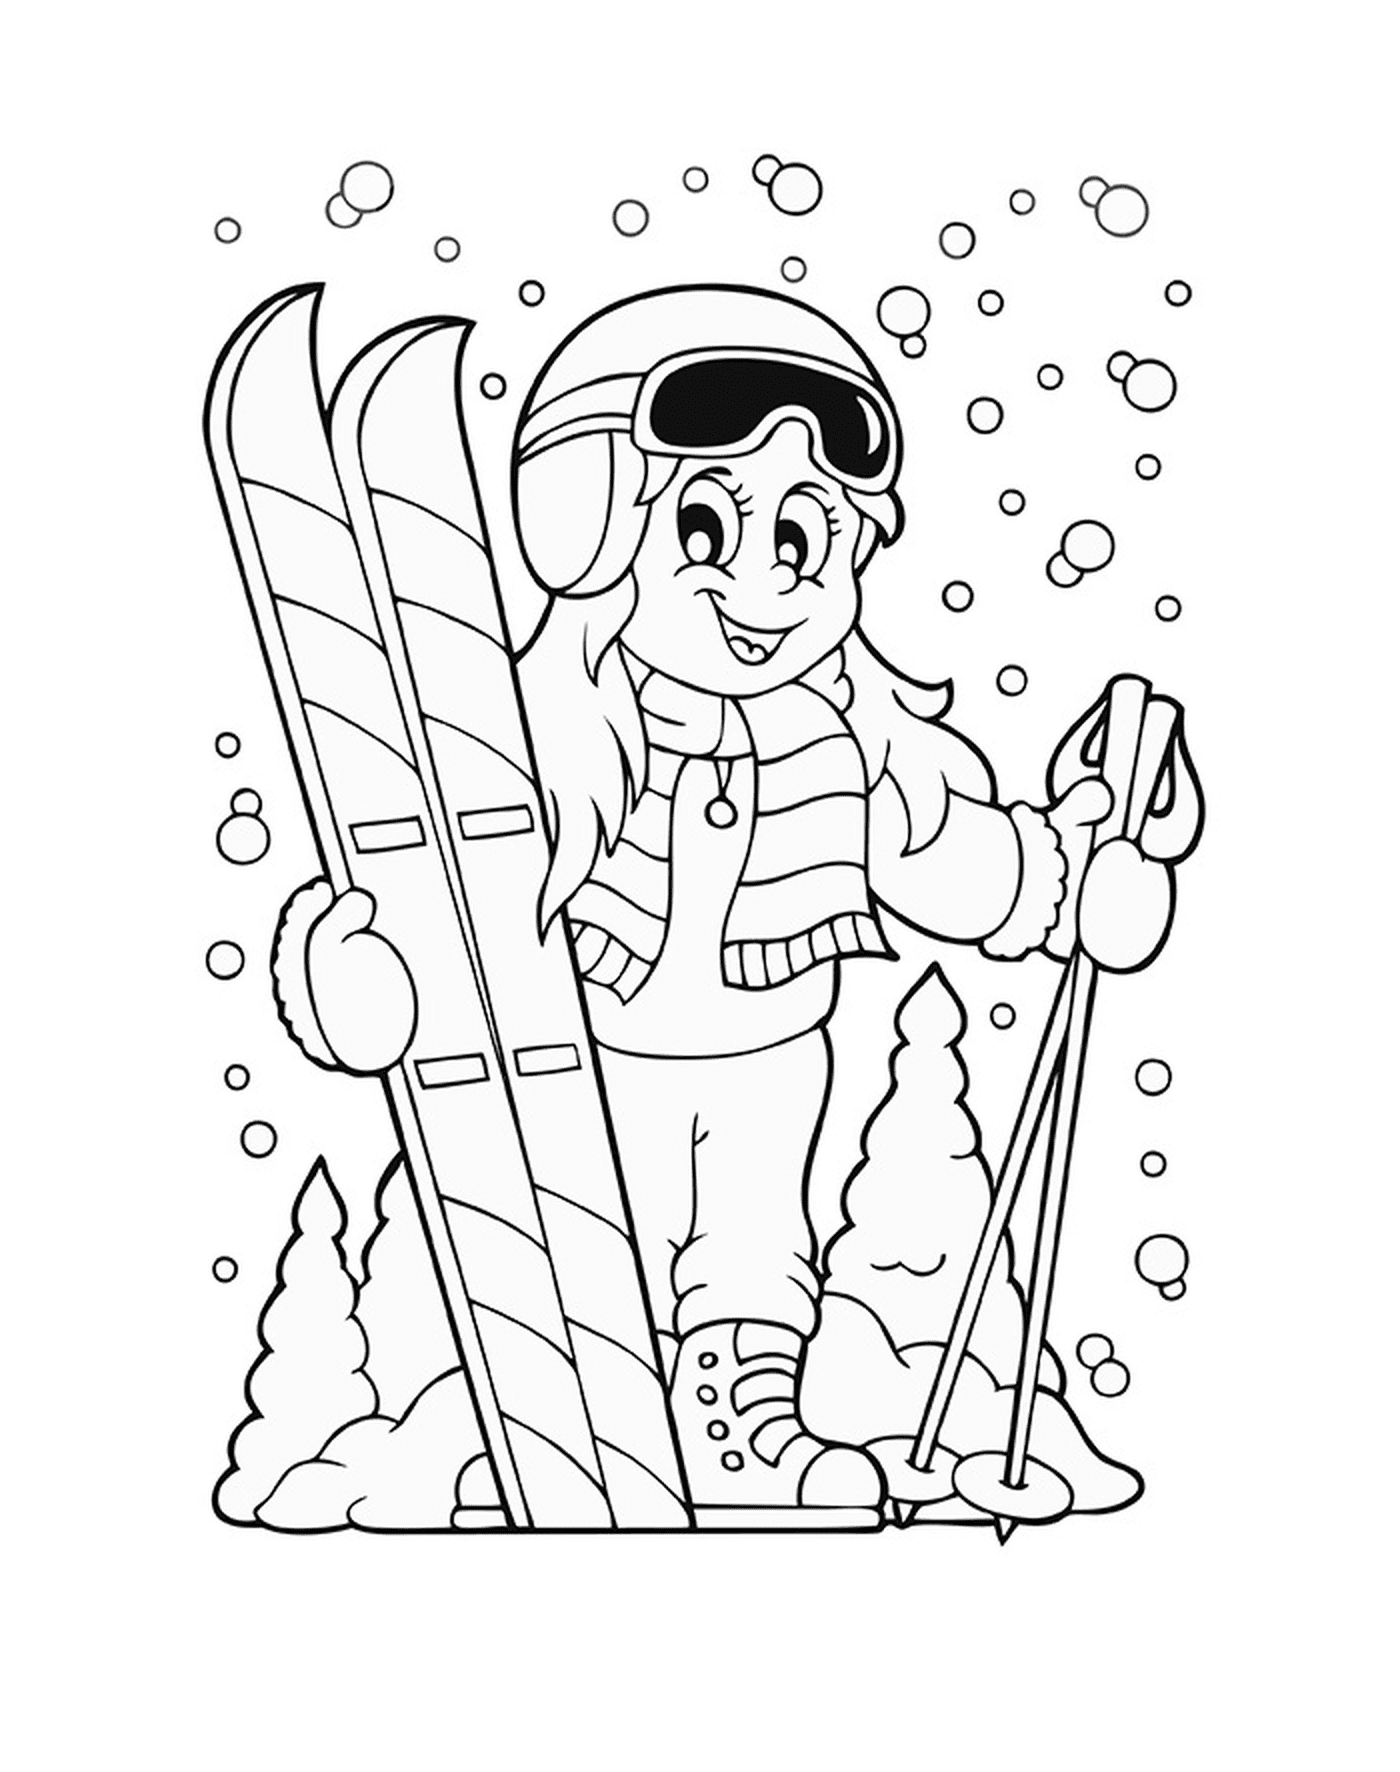   Sport d'hiver, ski, fille tenant des skis 